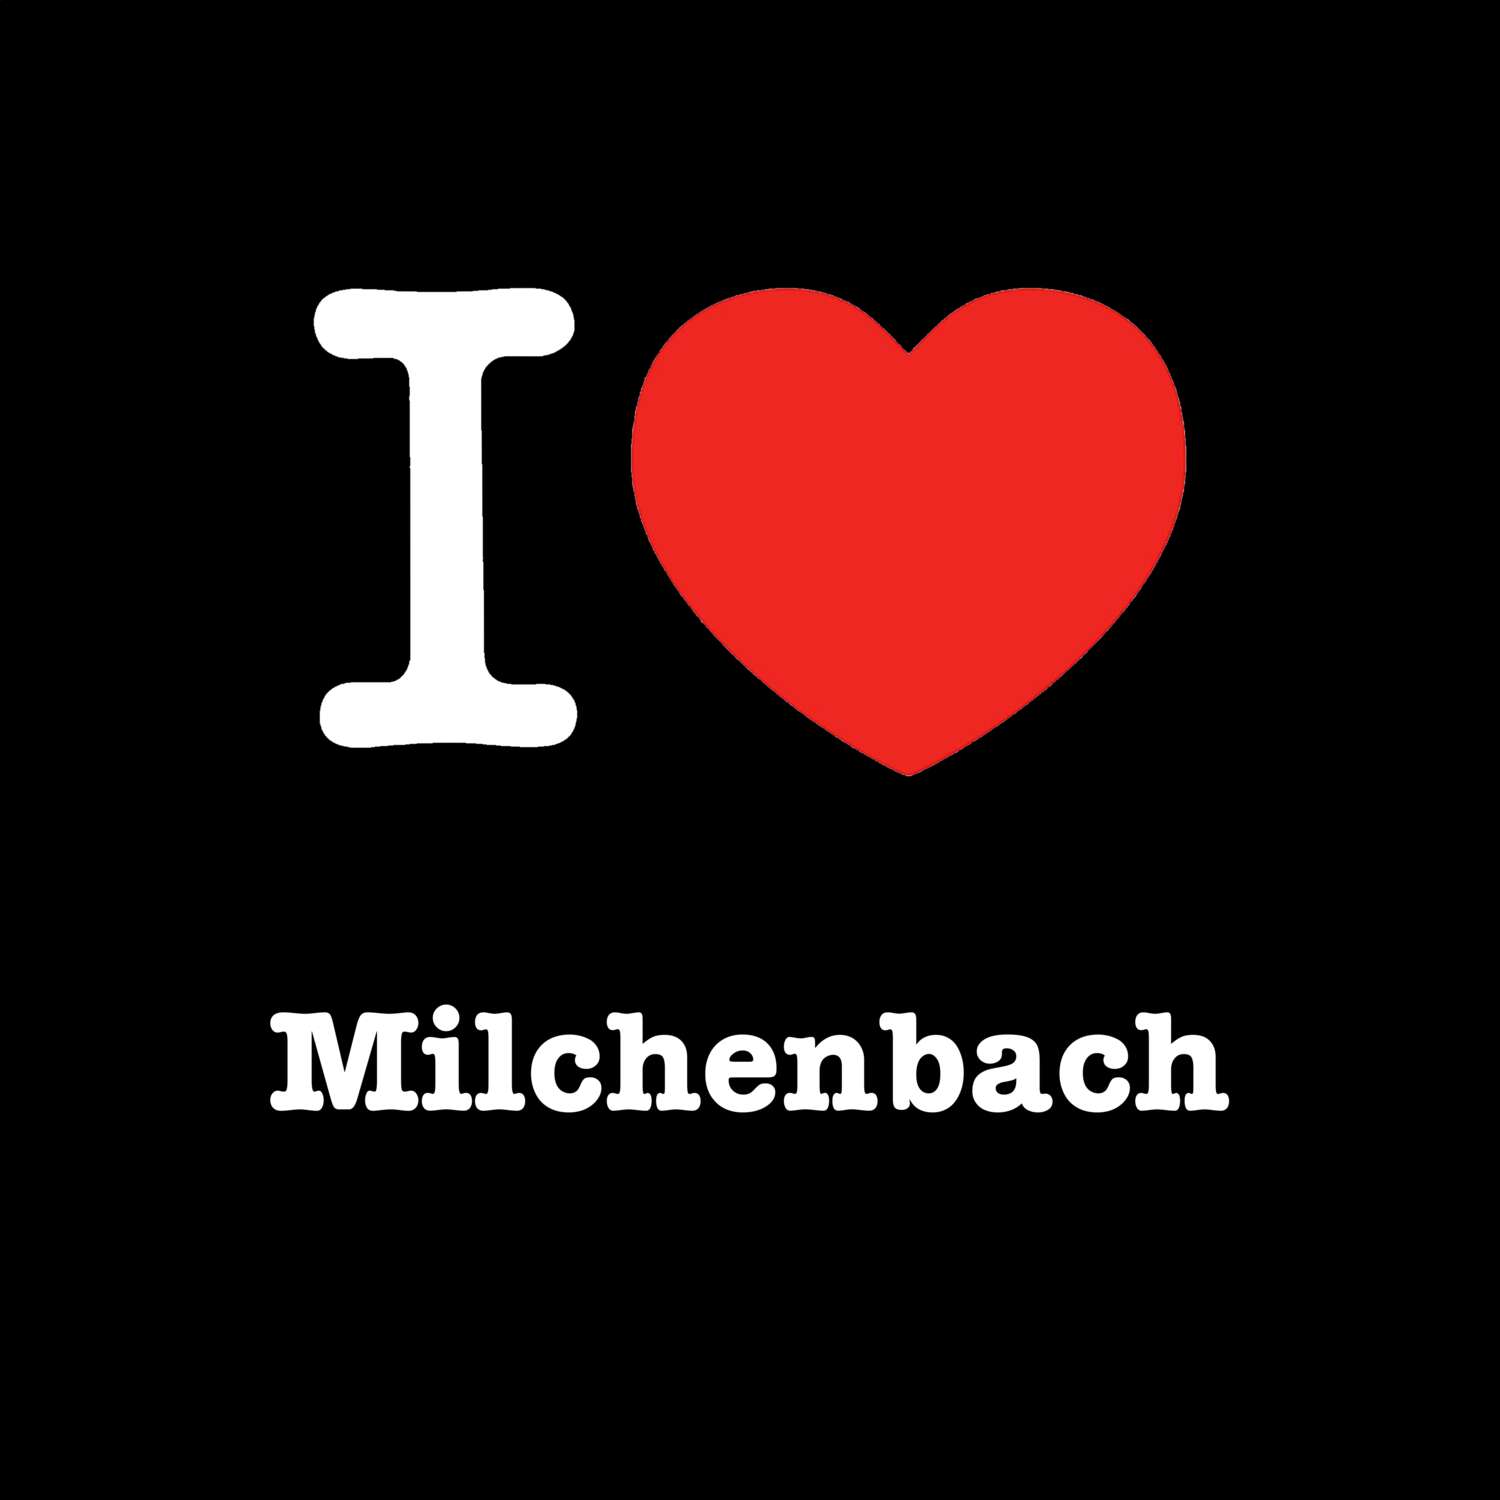 Milchenbach T-Shirt »I love«